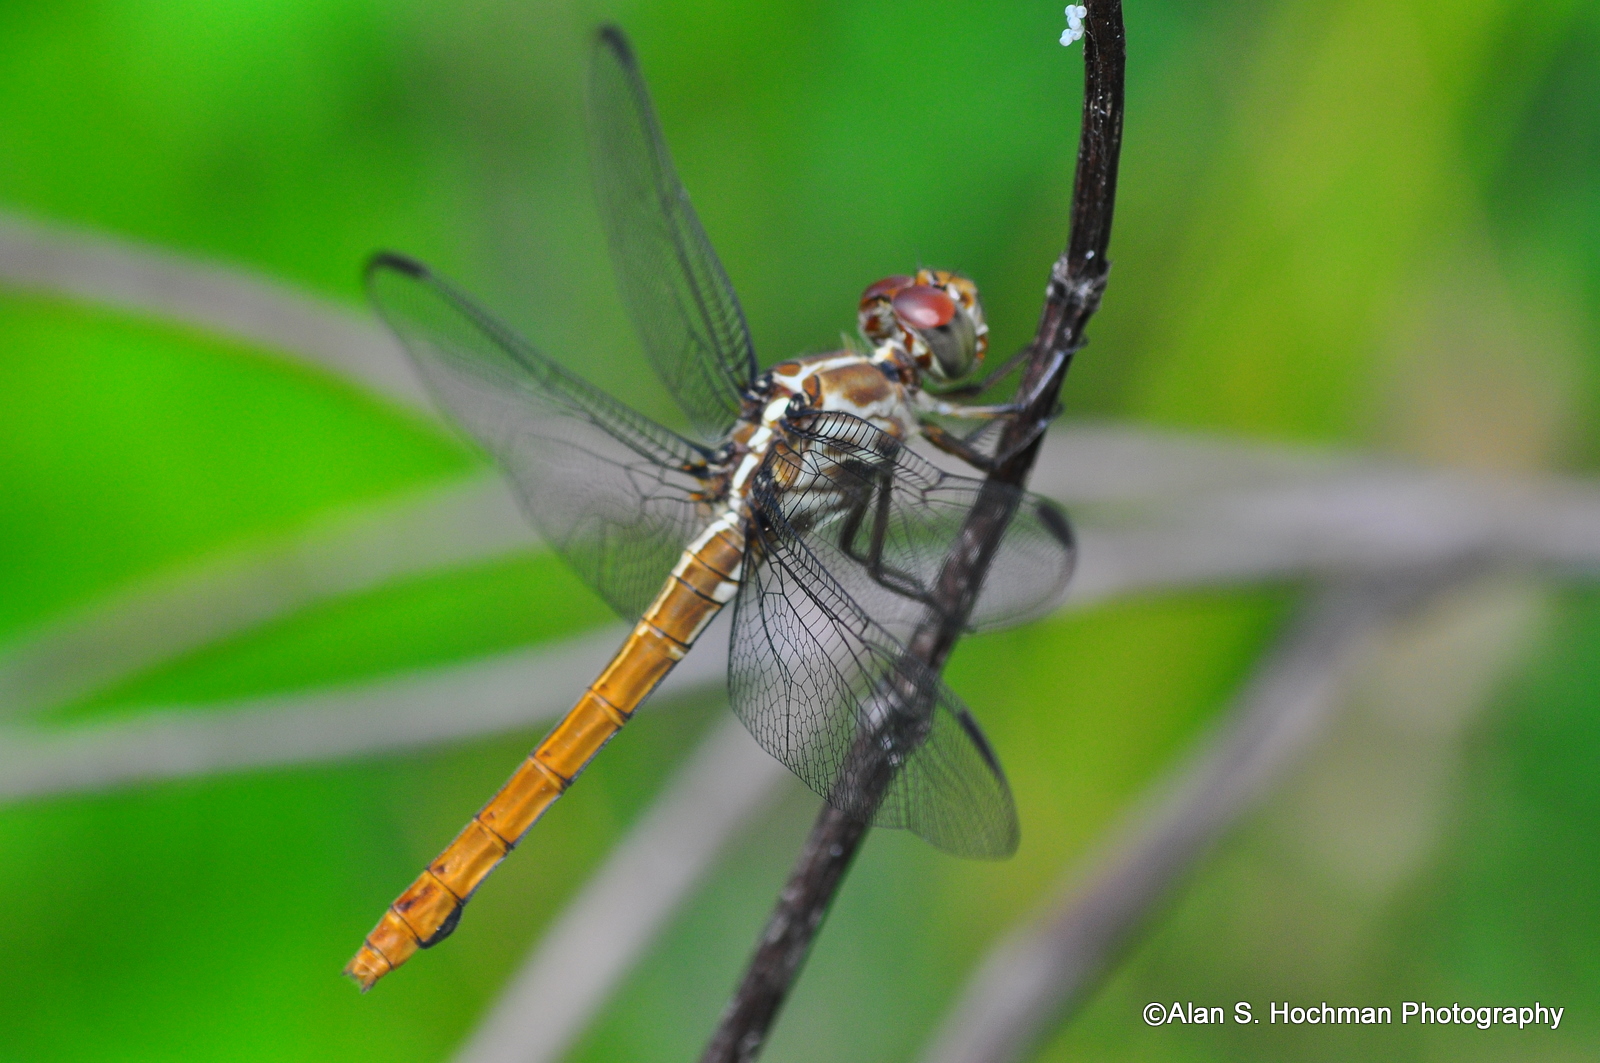 "Dragonfly at Big Cypress National Reserve"